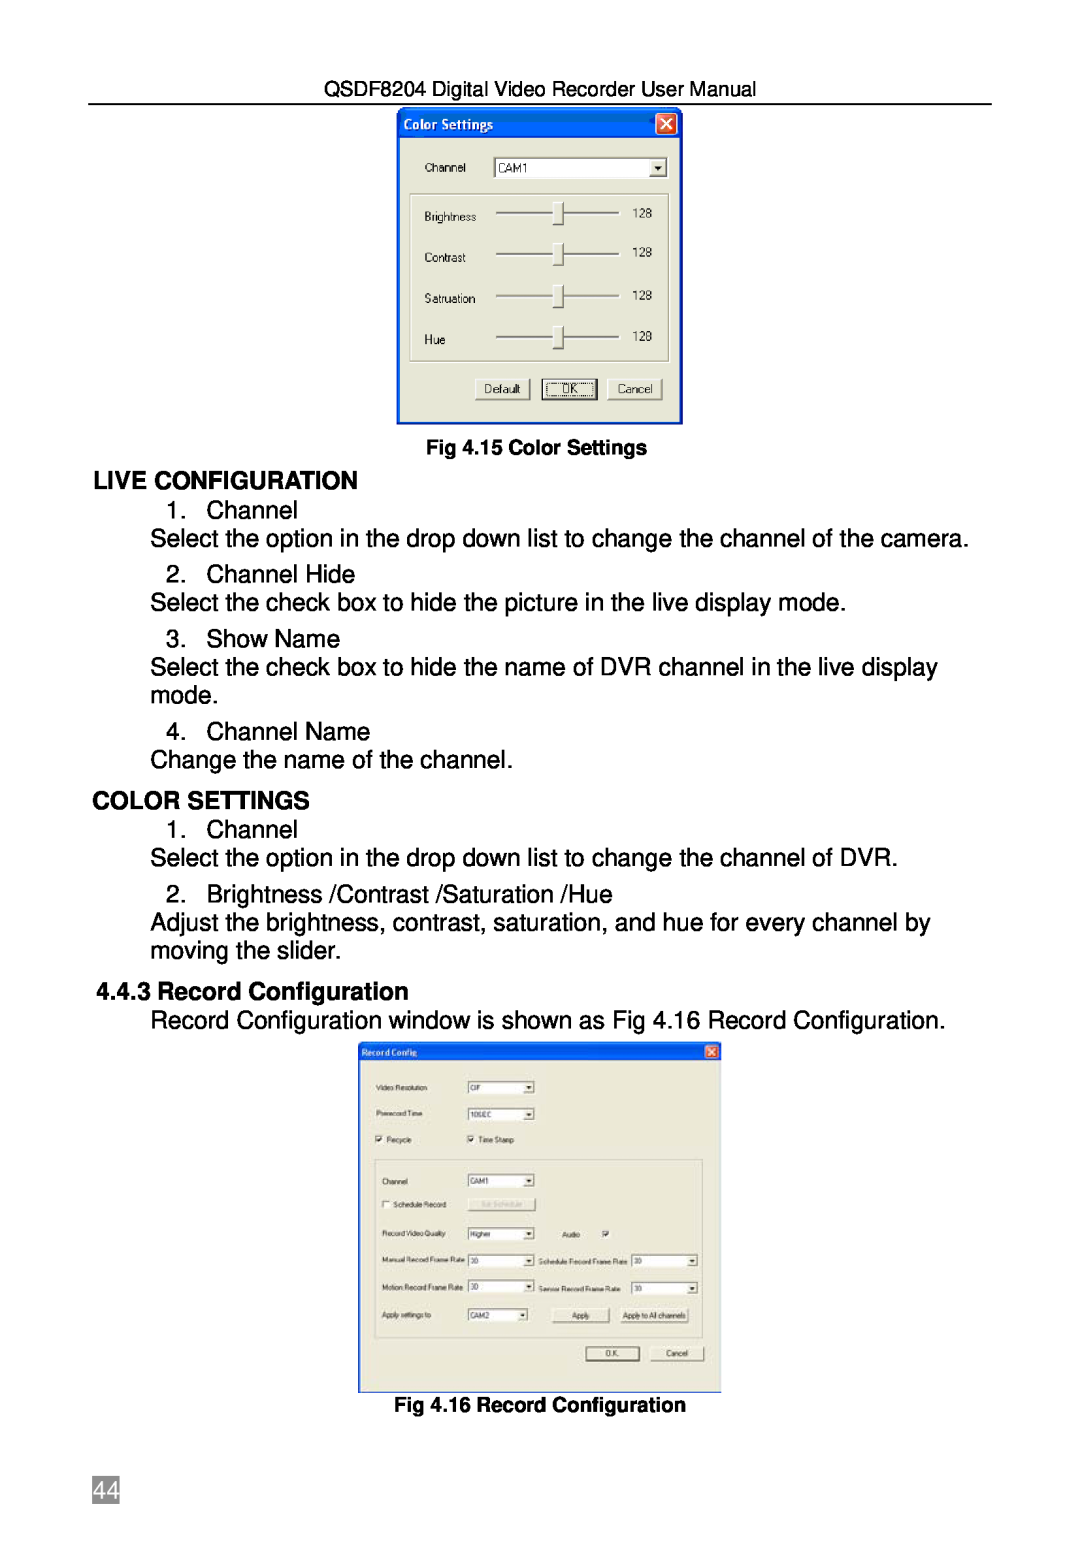 Q-See QSDF8204 user manual Live Configuration, Color Settings, Record Configuration 